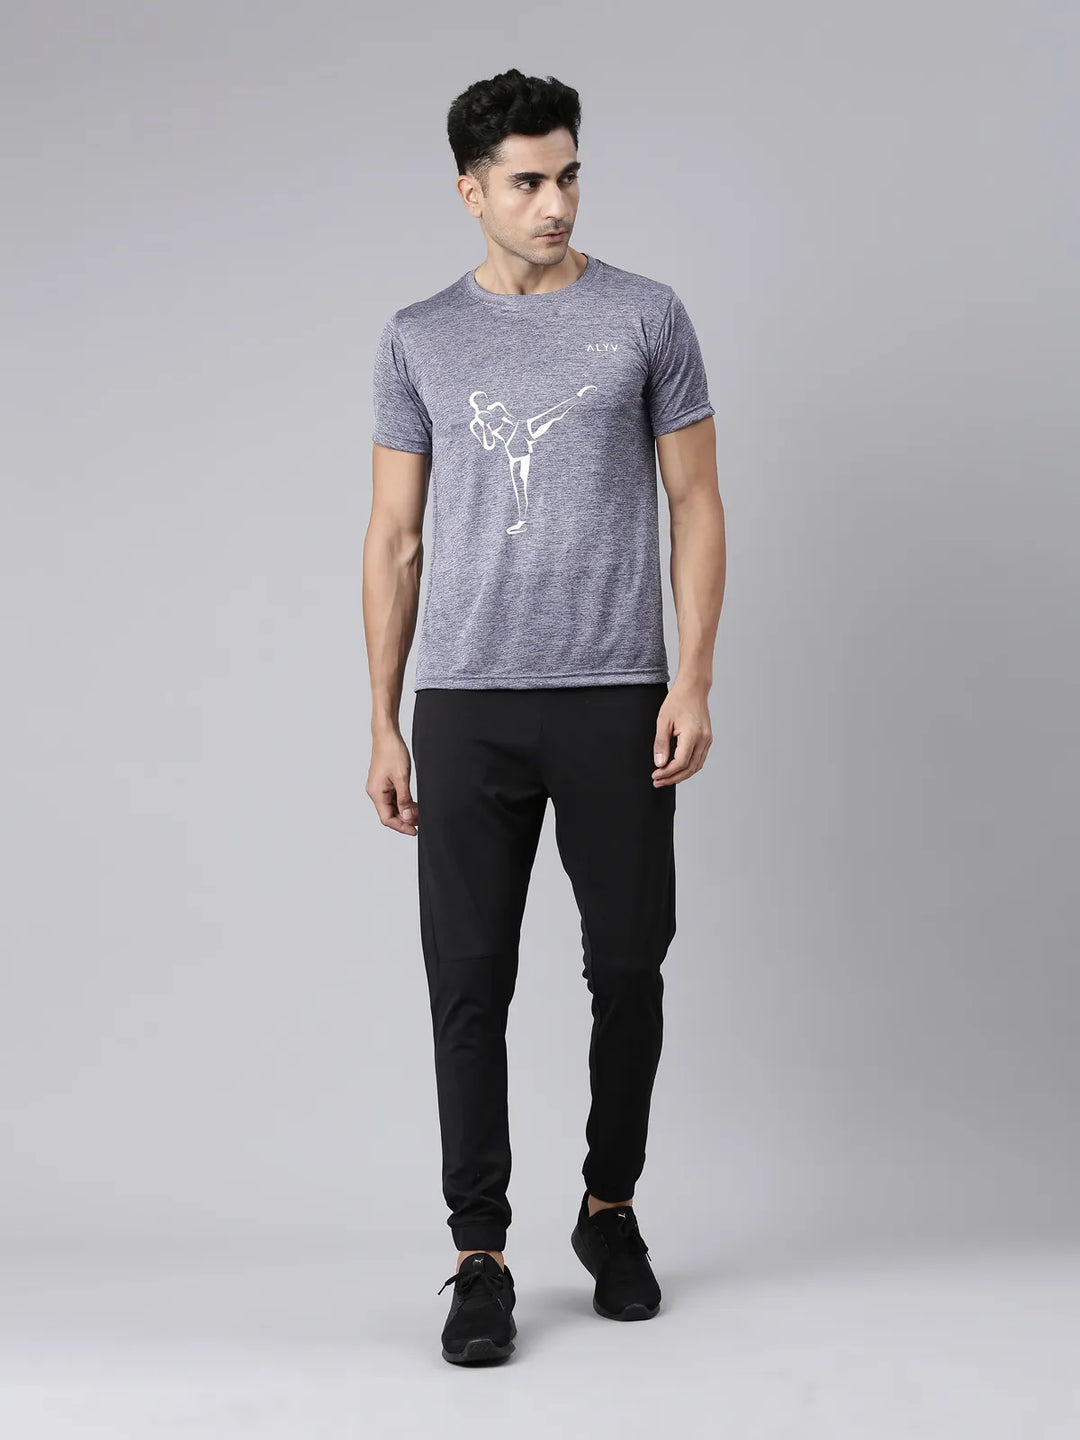 Men’s Max Performance Dry Fit T-shirt (Navy)